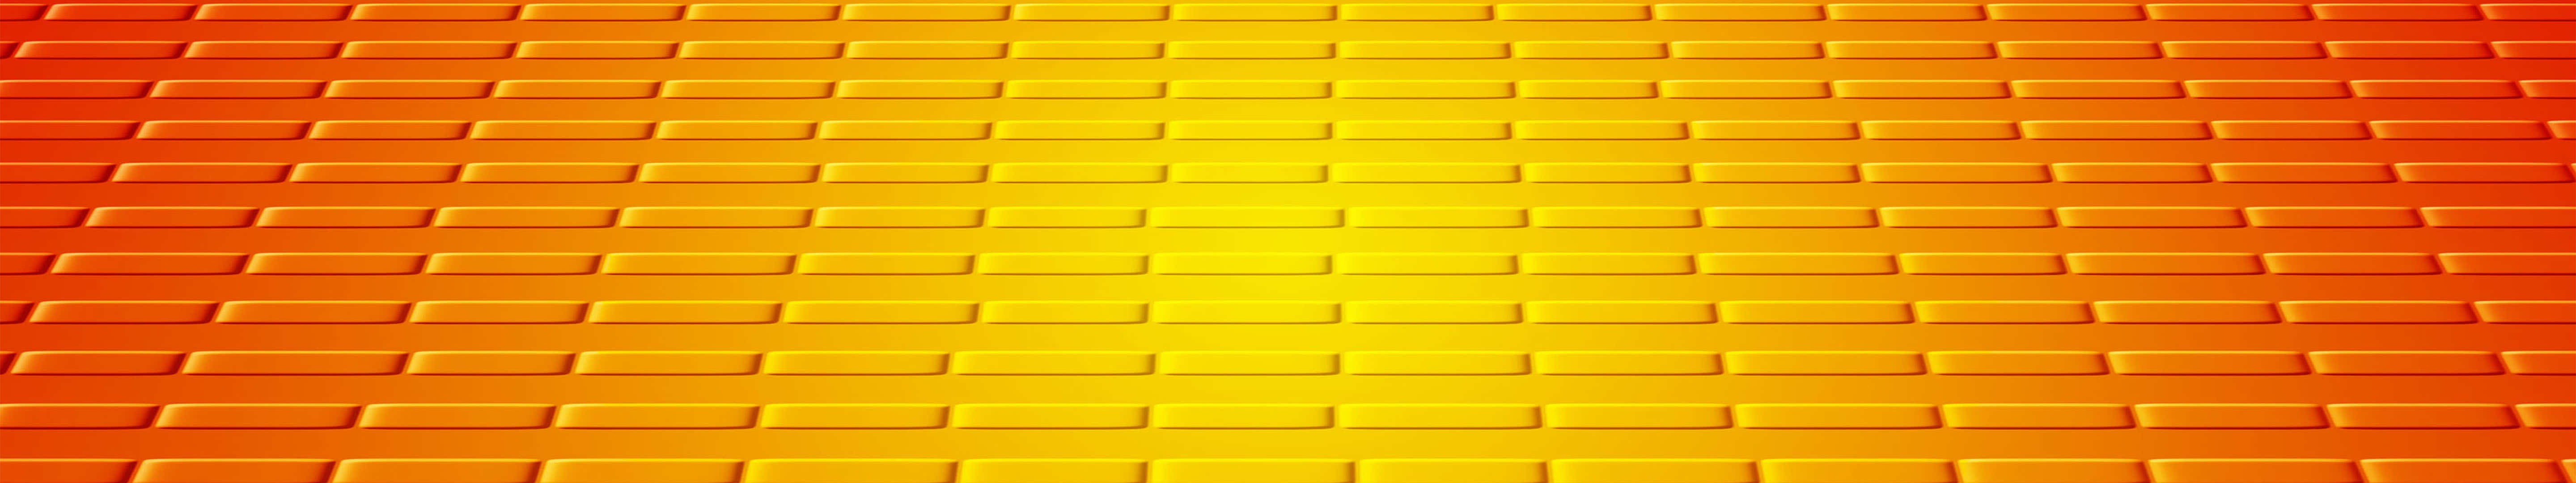 A Brick Wall With Orange And Yellow Bricks